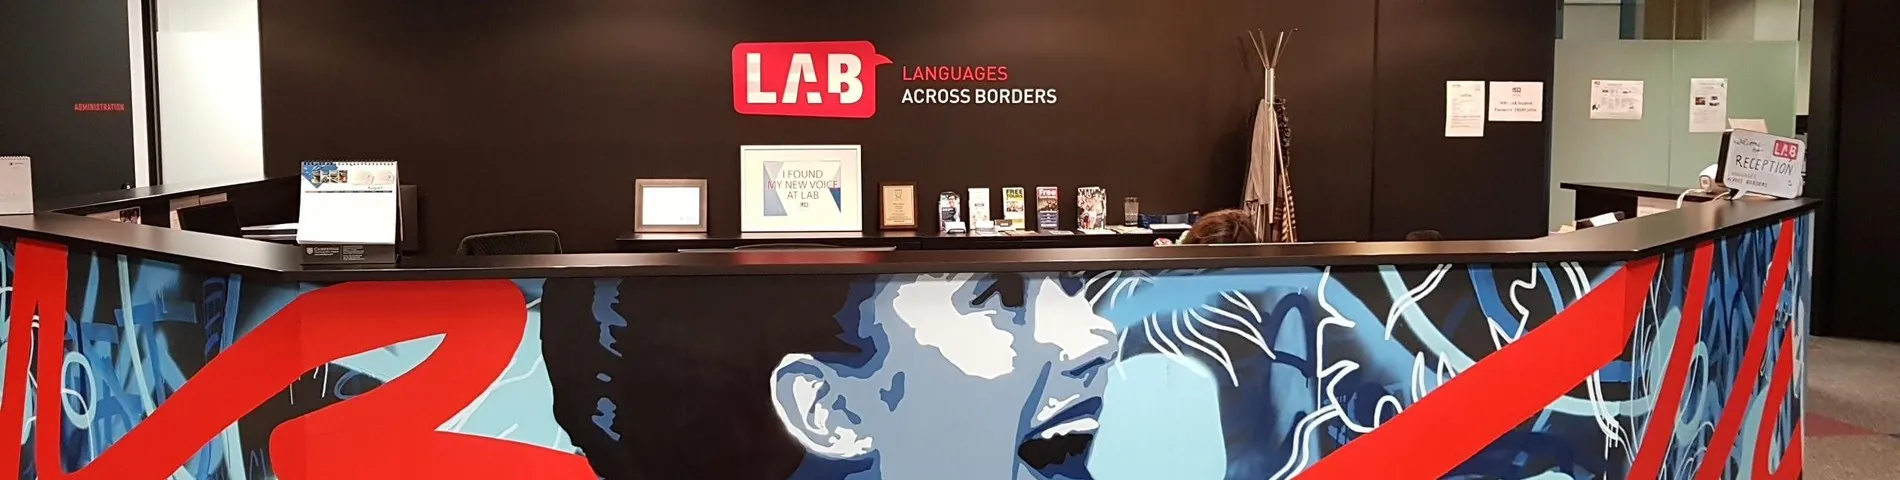 LAB - Languages Across Borders bilde 1